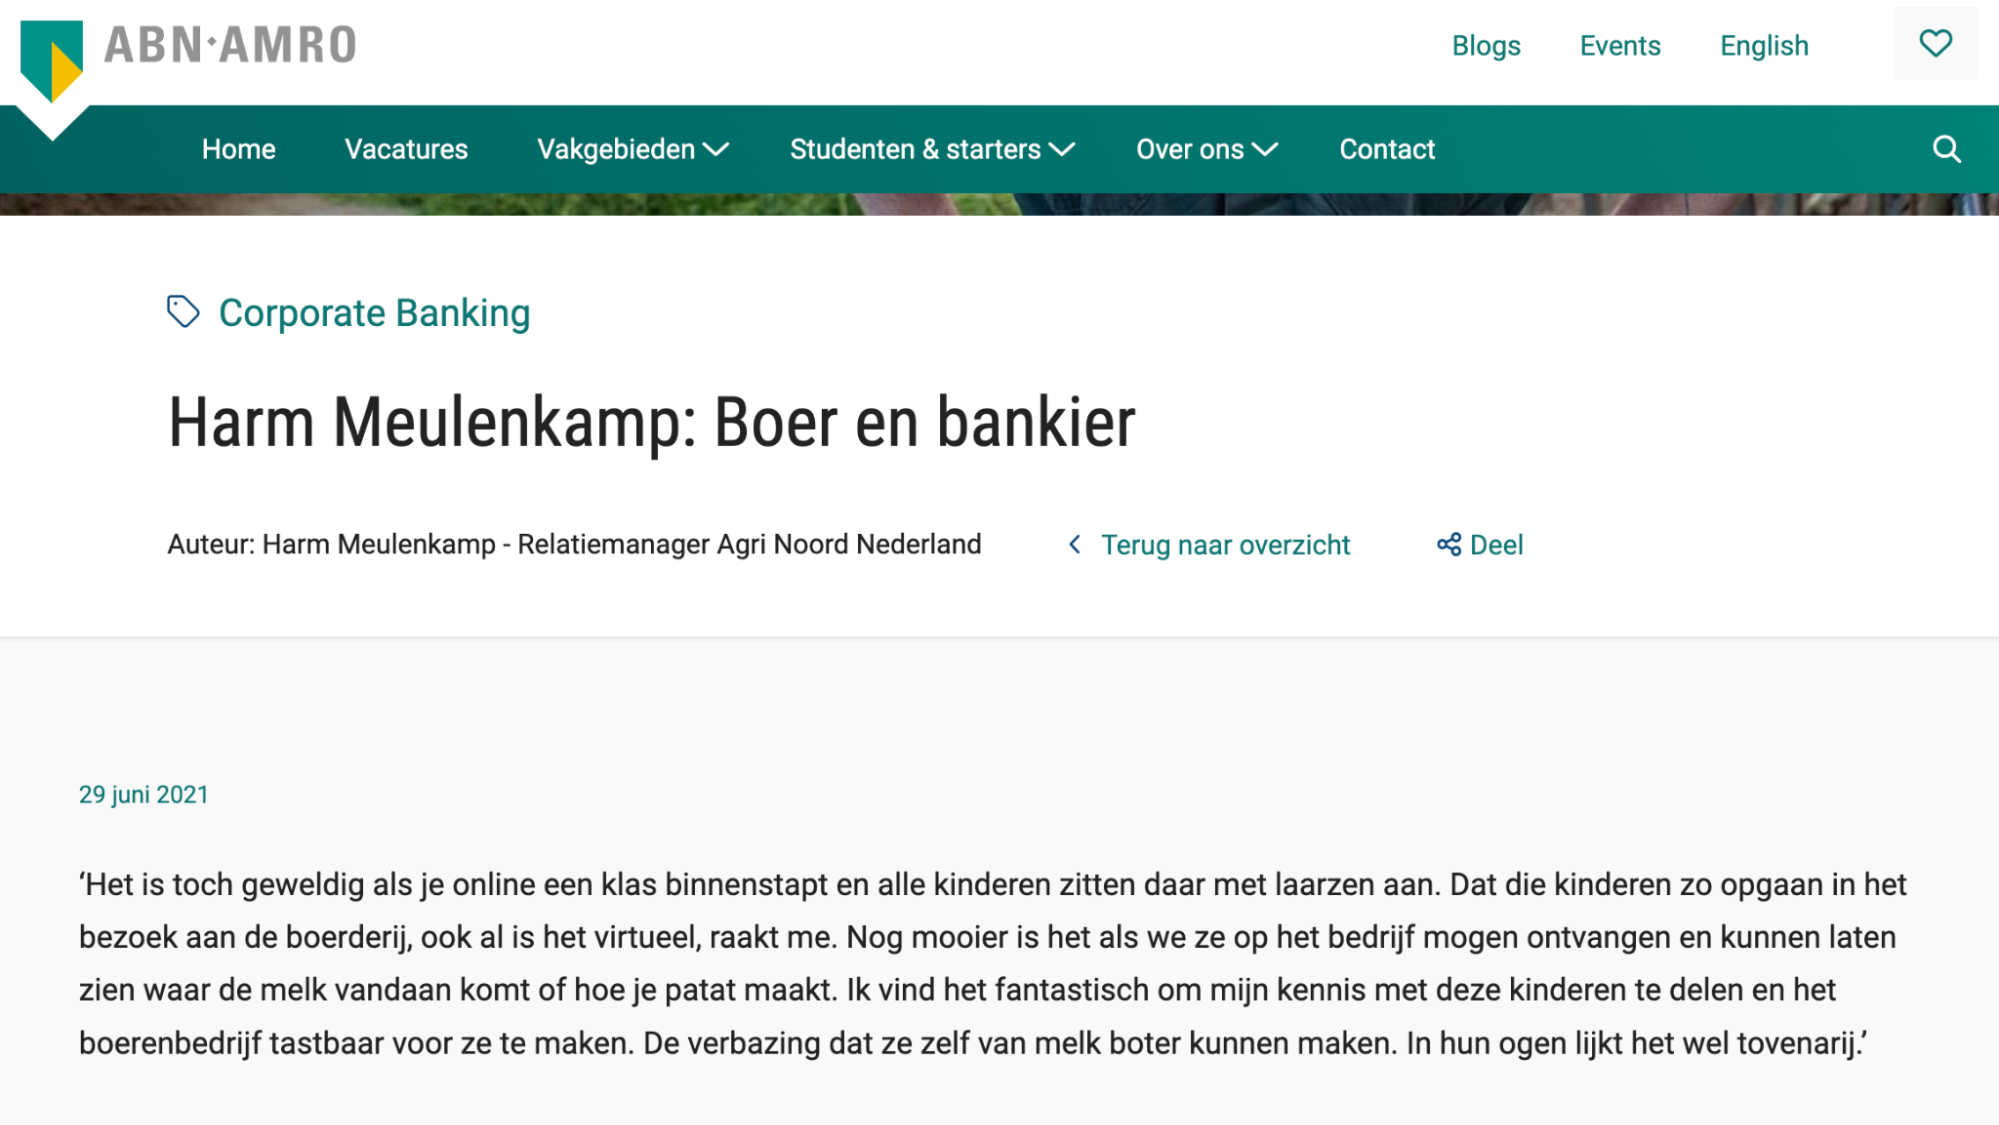 ABN-AMRO blog post, Dutch version